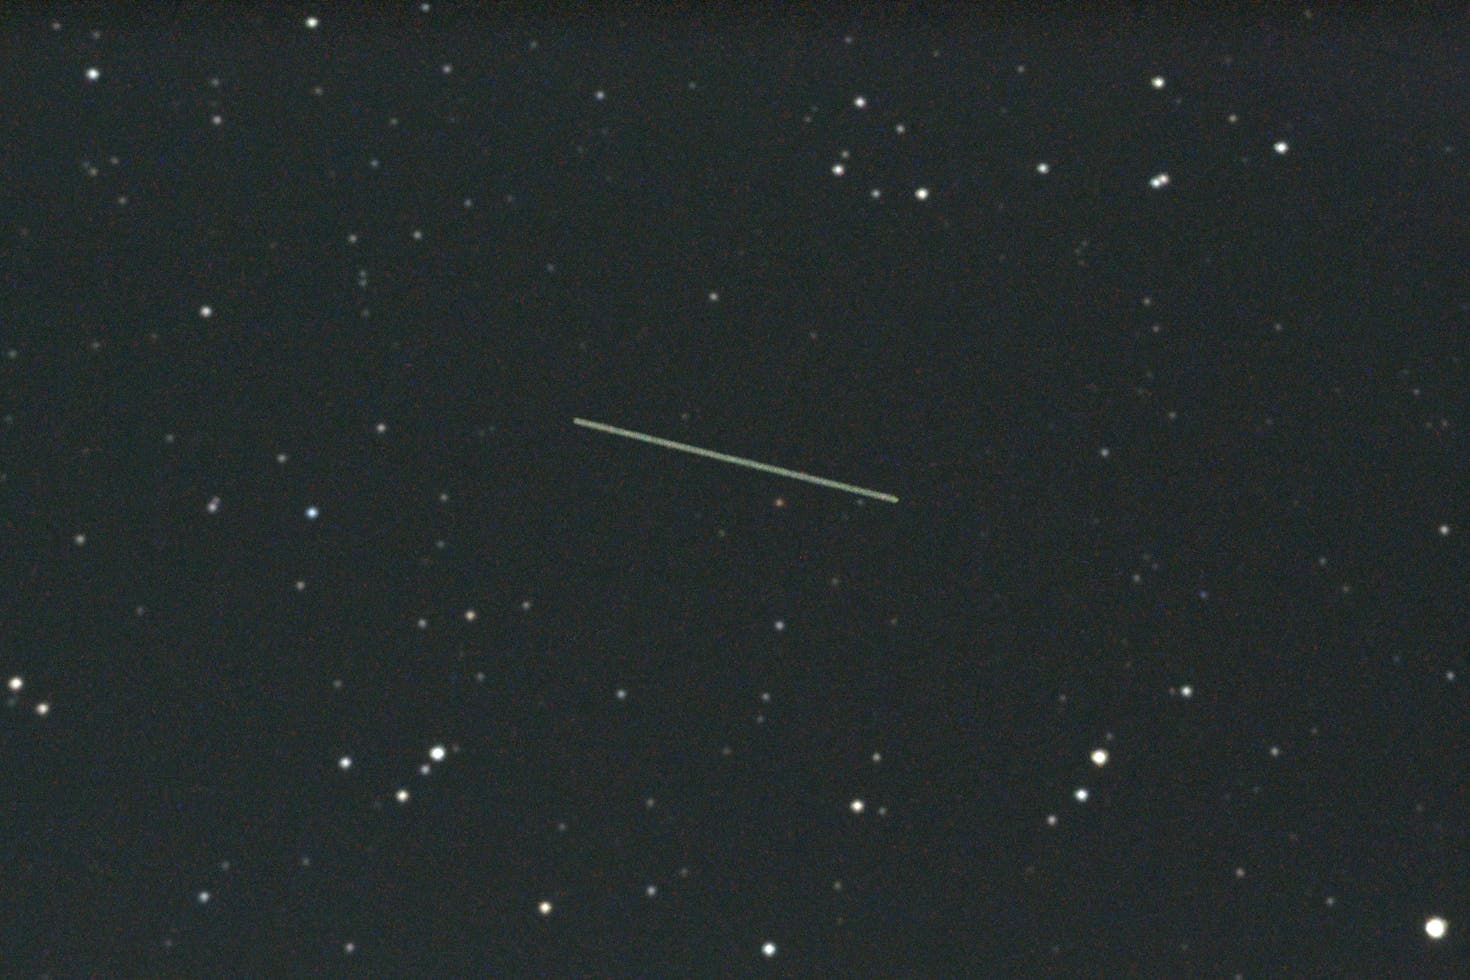 Asteroiden-Spur (85713) 1998 SS49 